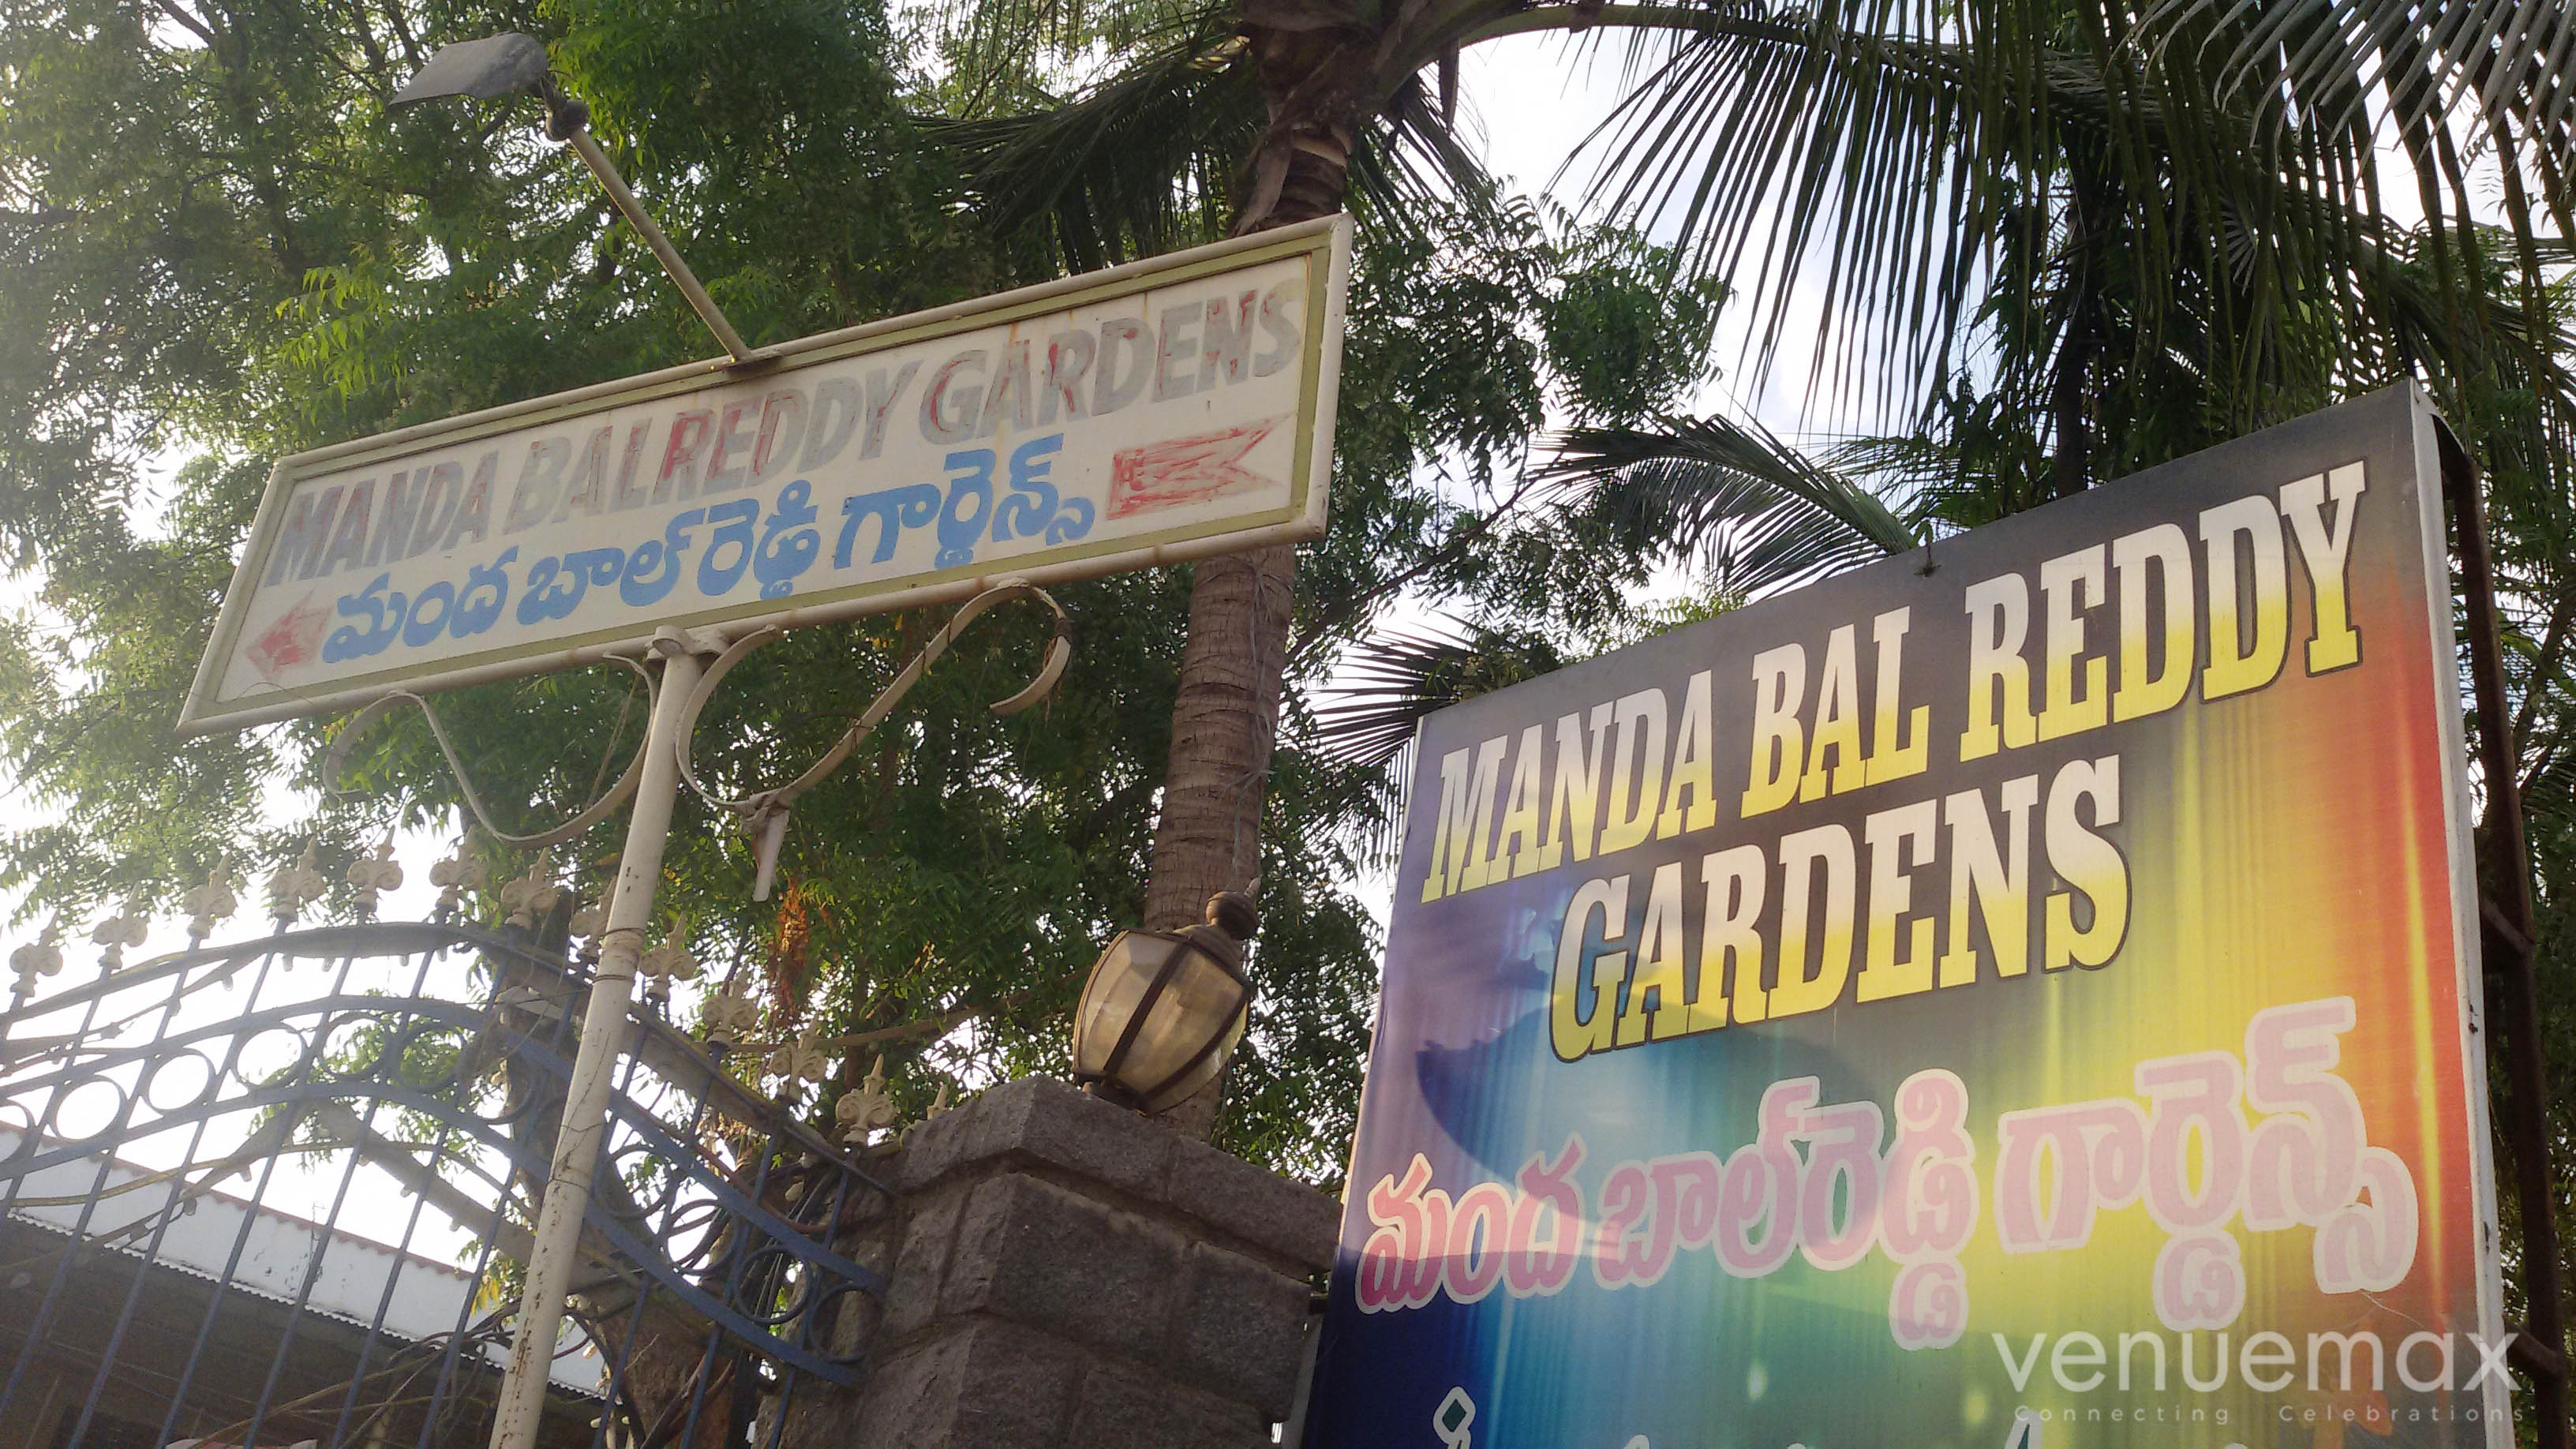 Manda BalReddy Gardens